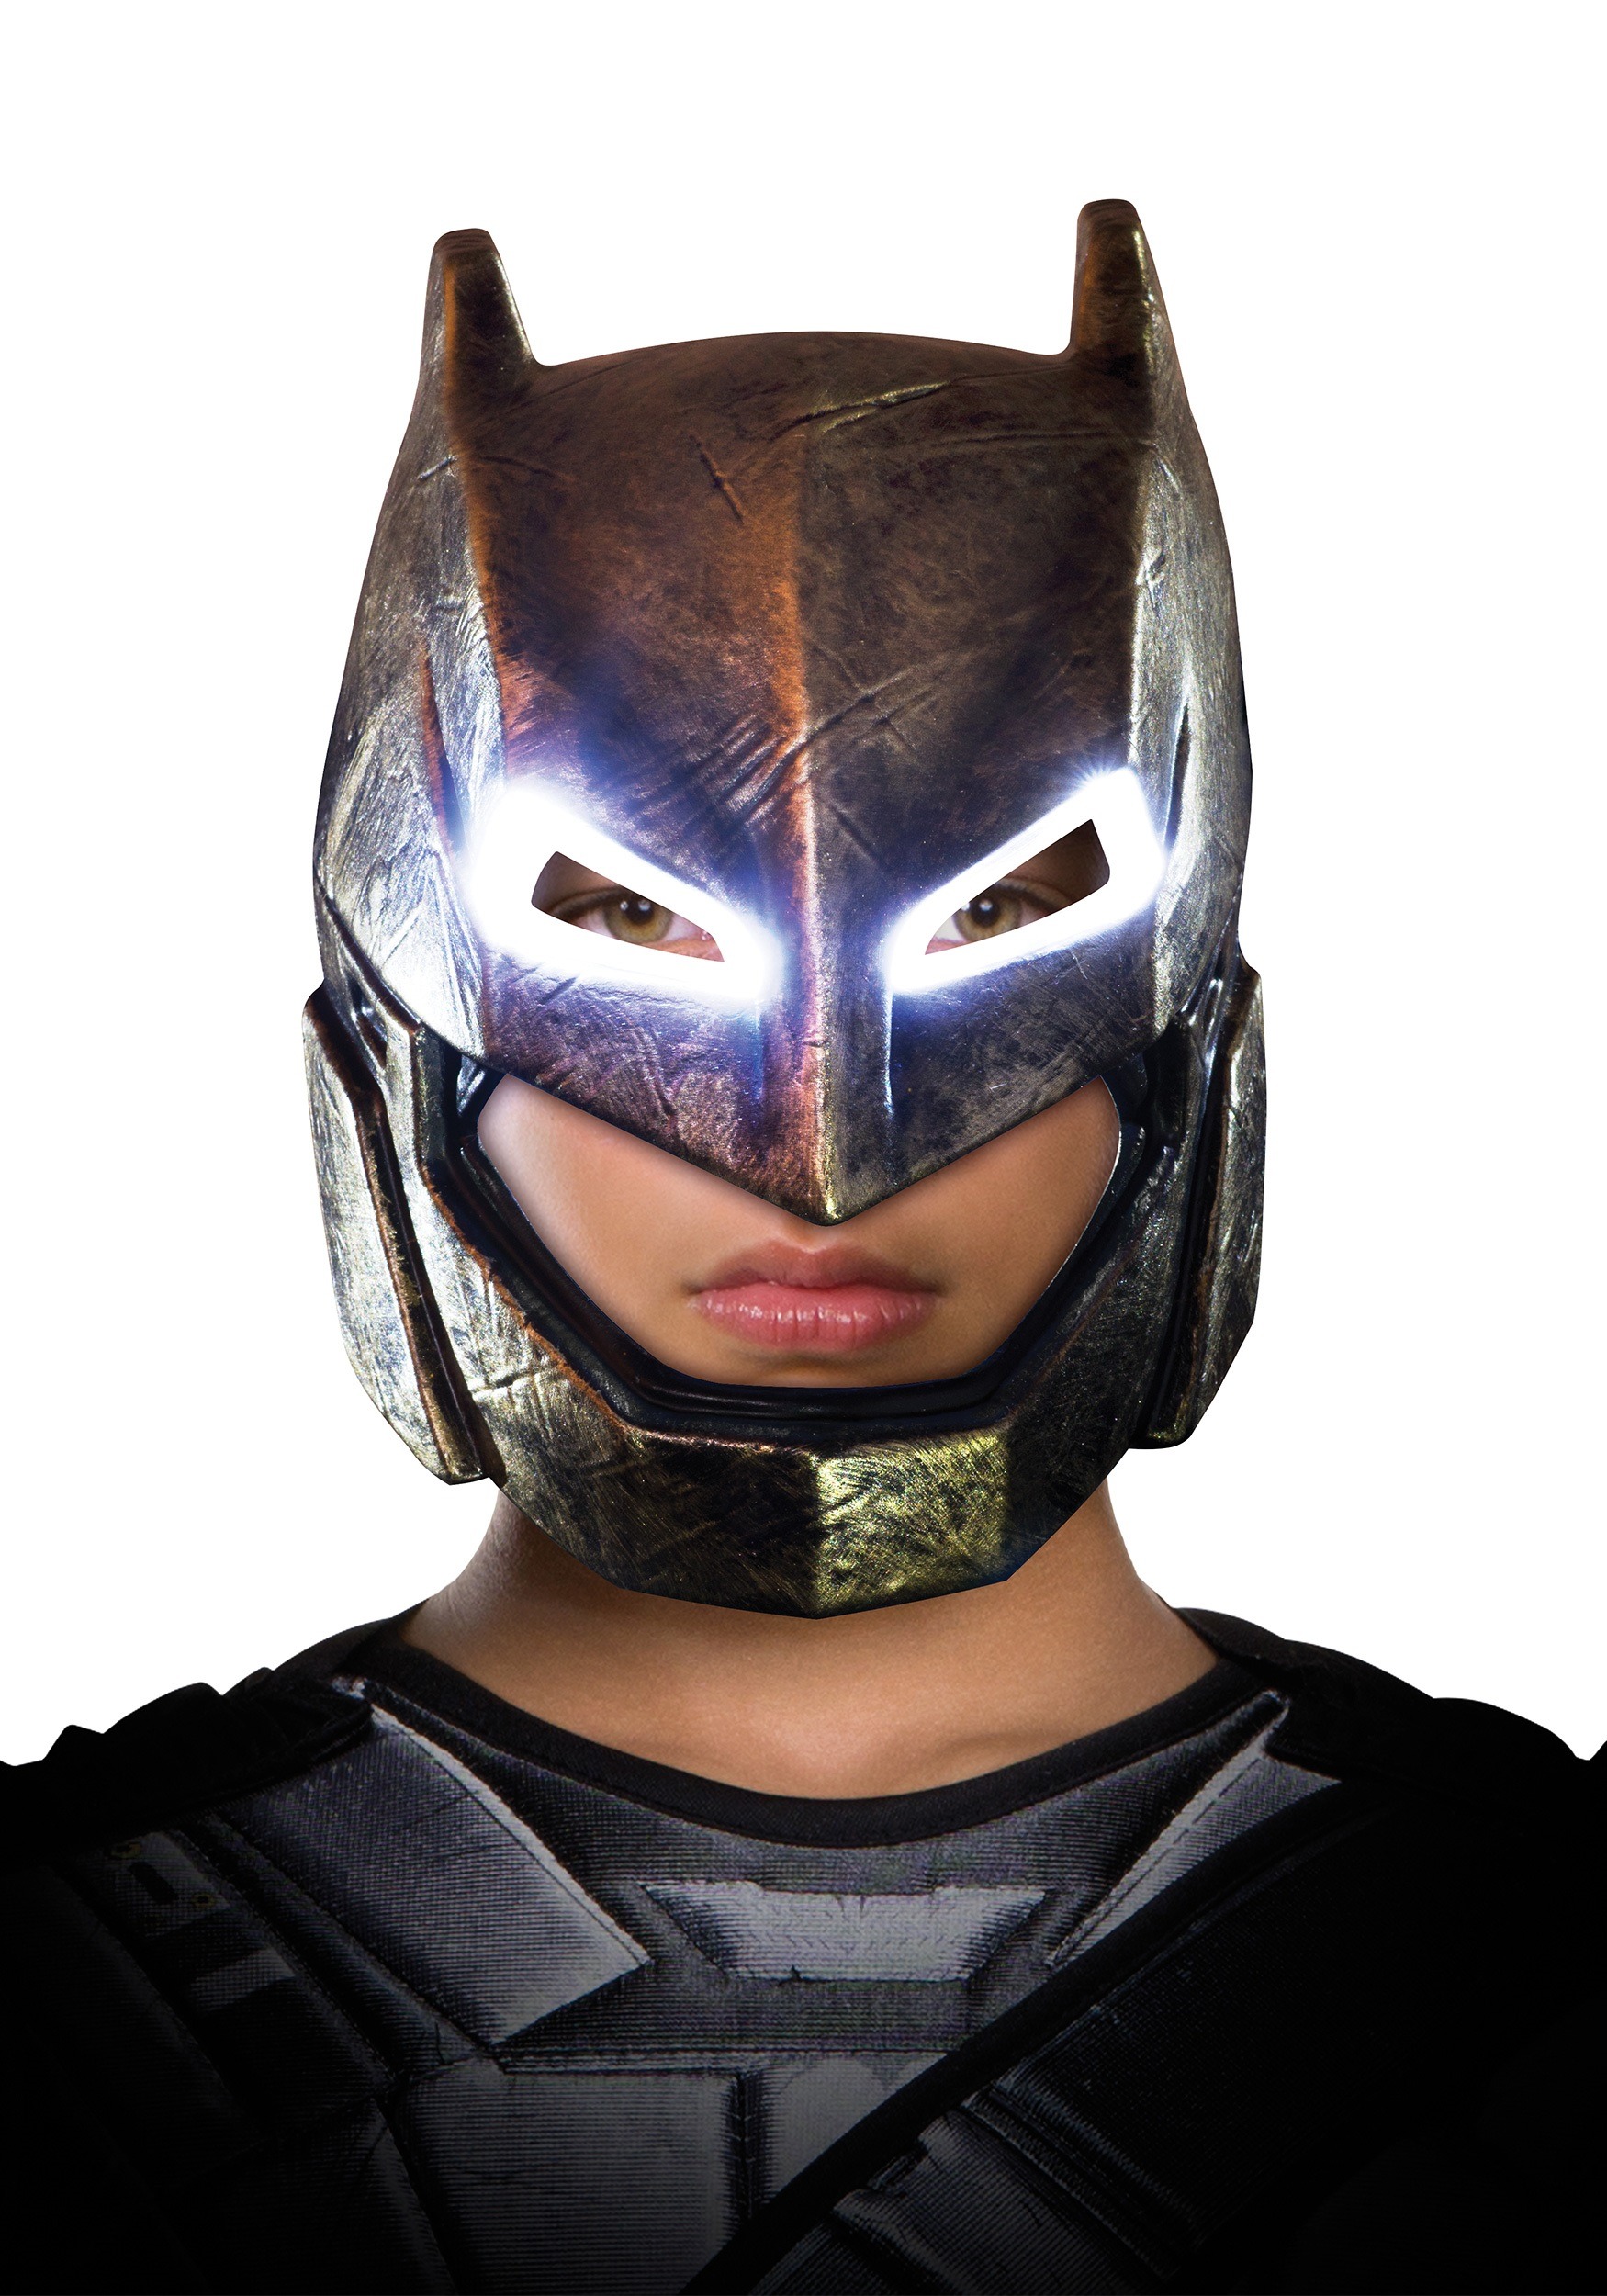 https://images.halloweencostumes.com.mx/products/39817/1-1/mascara-de-batman-dawn-of-justice-blindada-light-up-ninos.jpg